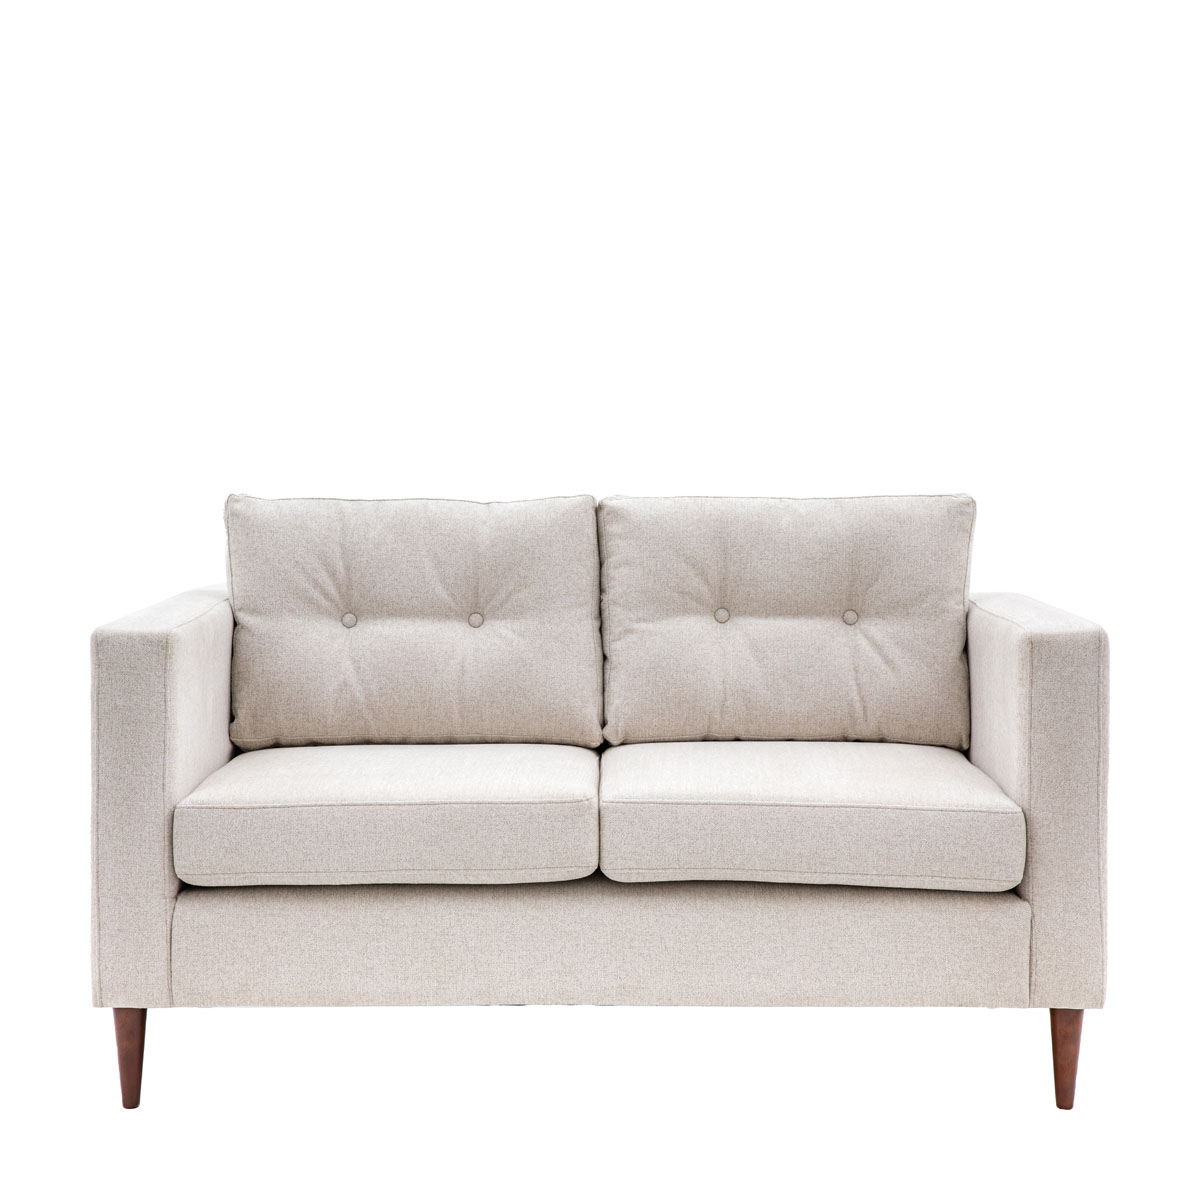 Whitwell Sofa 2 Seater Light Grey 1450x860x840mm